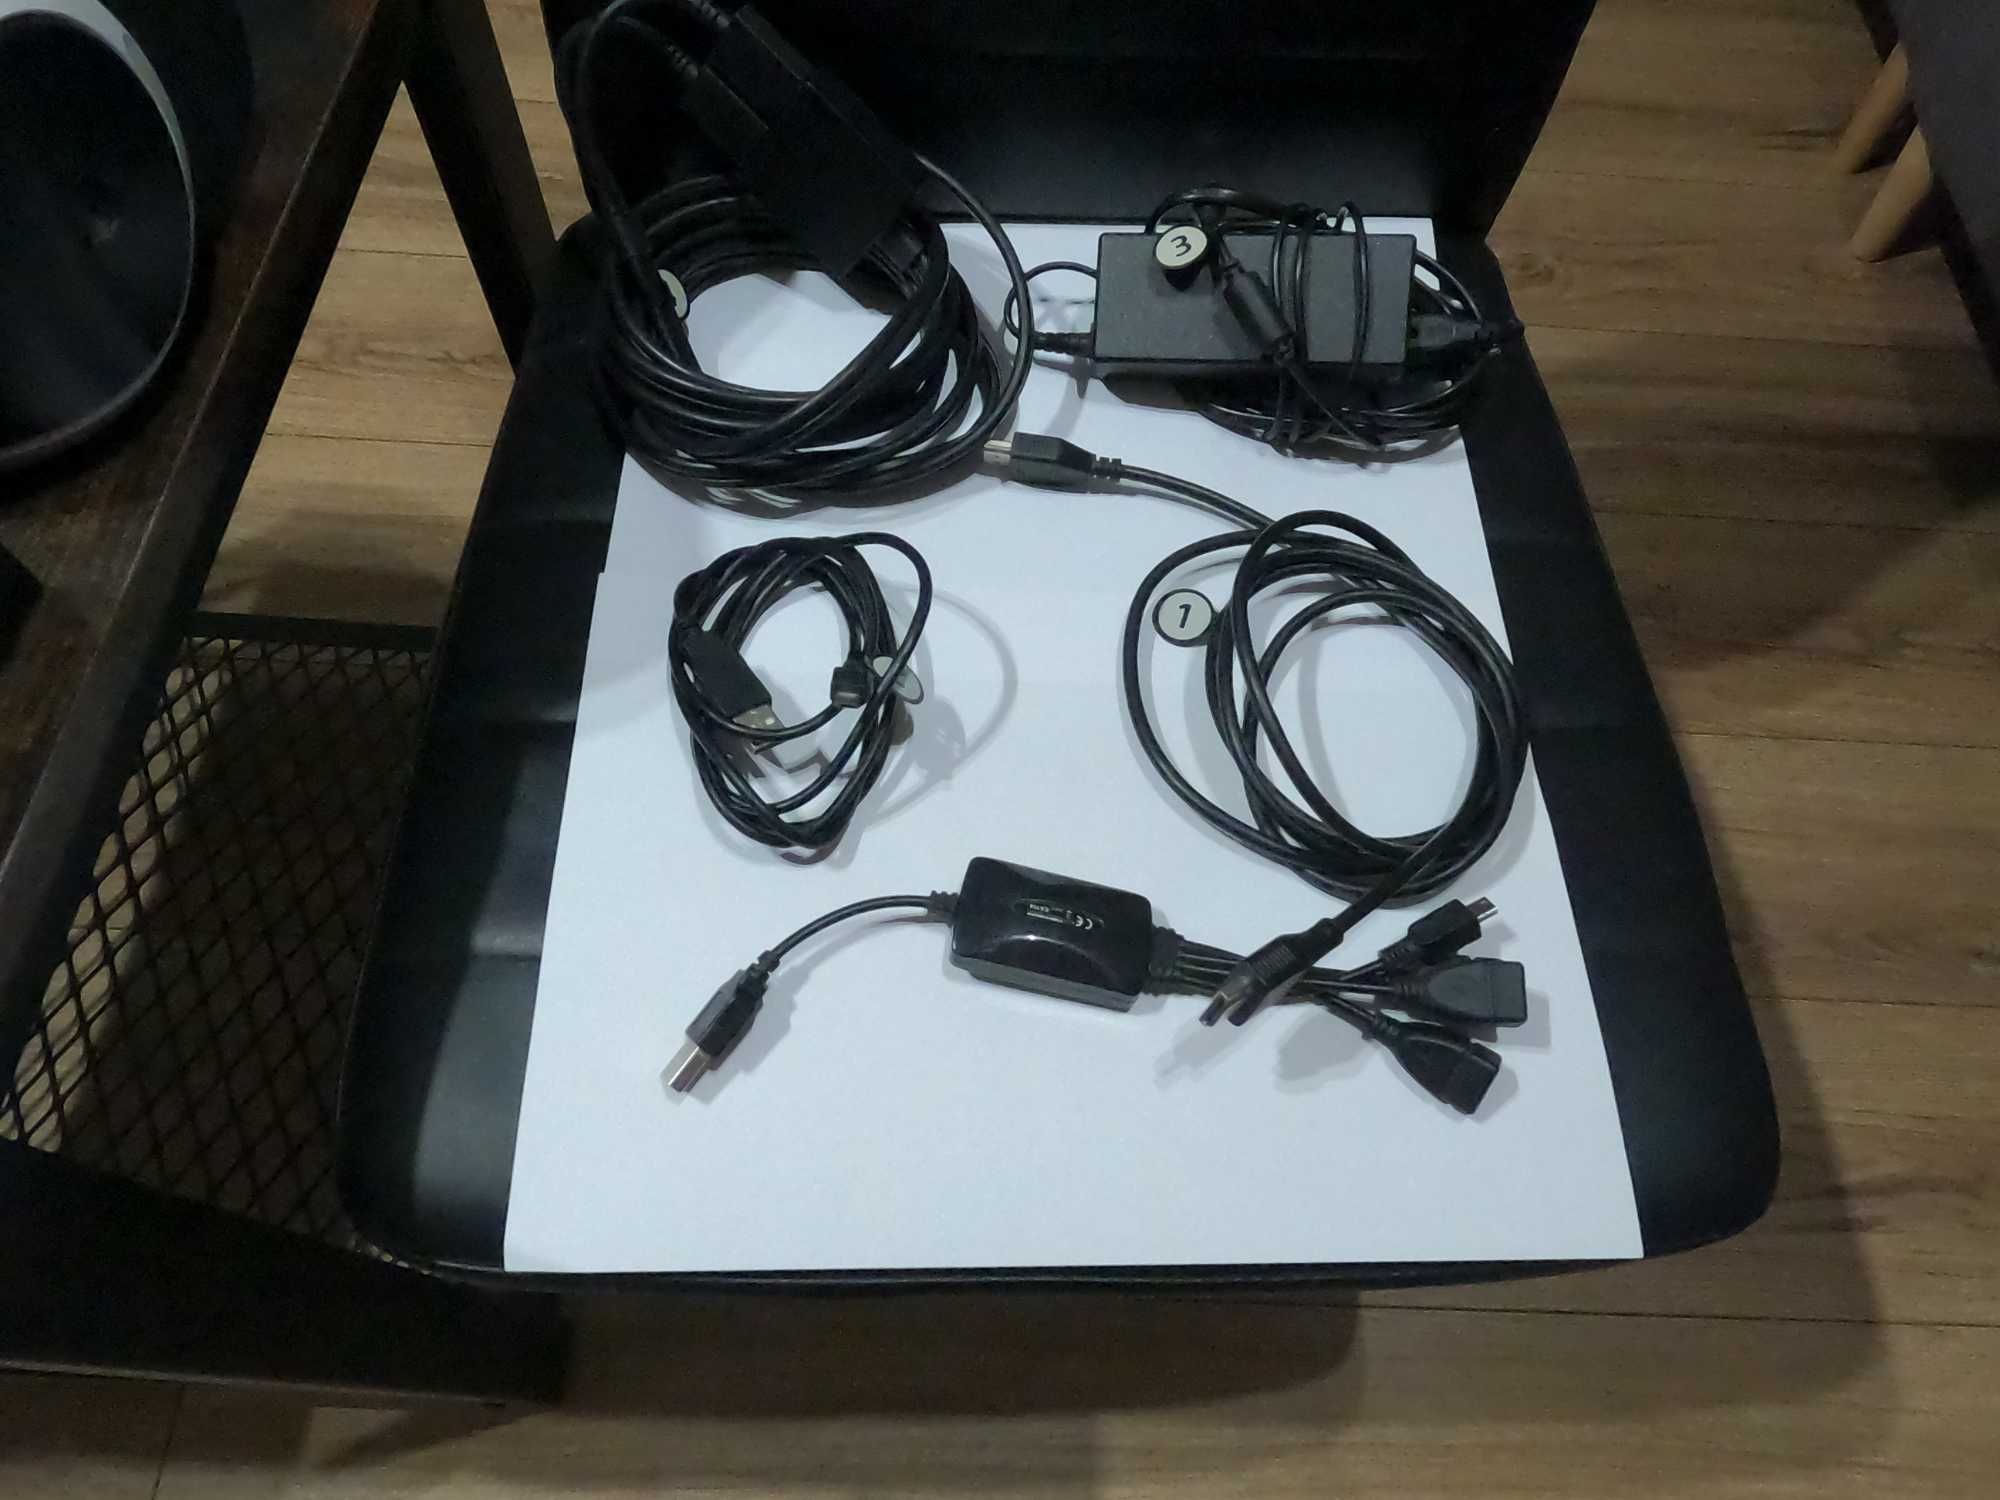 Gogle PS VR + kontrolery move + kamera + gry warte 200zł